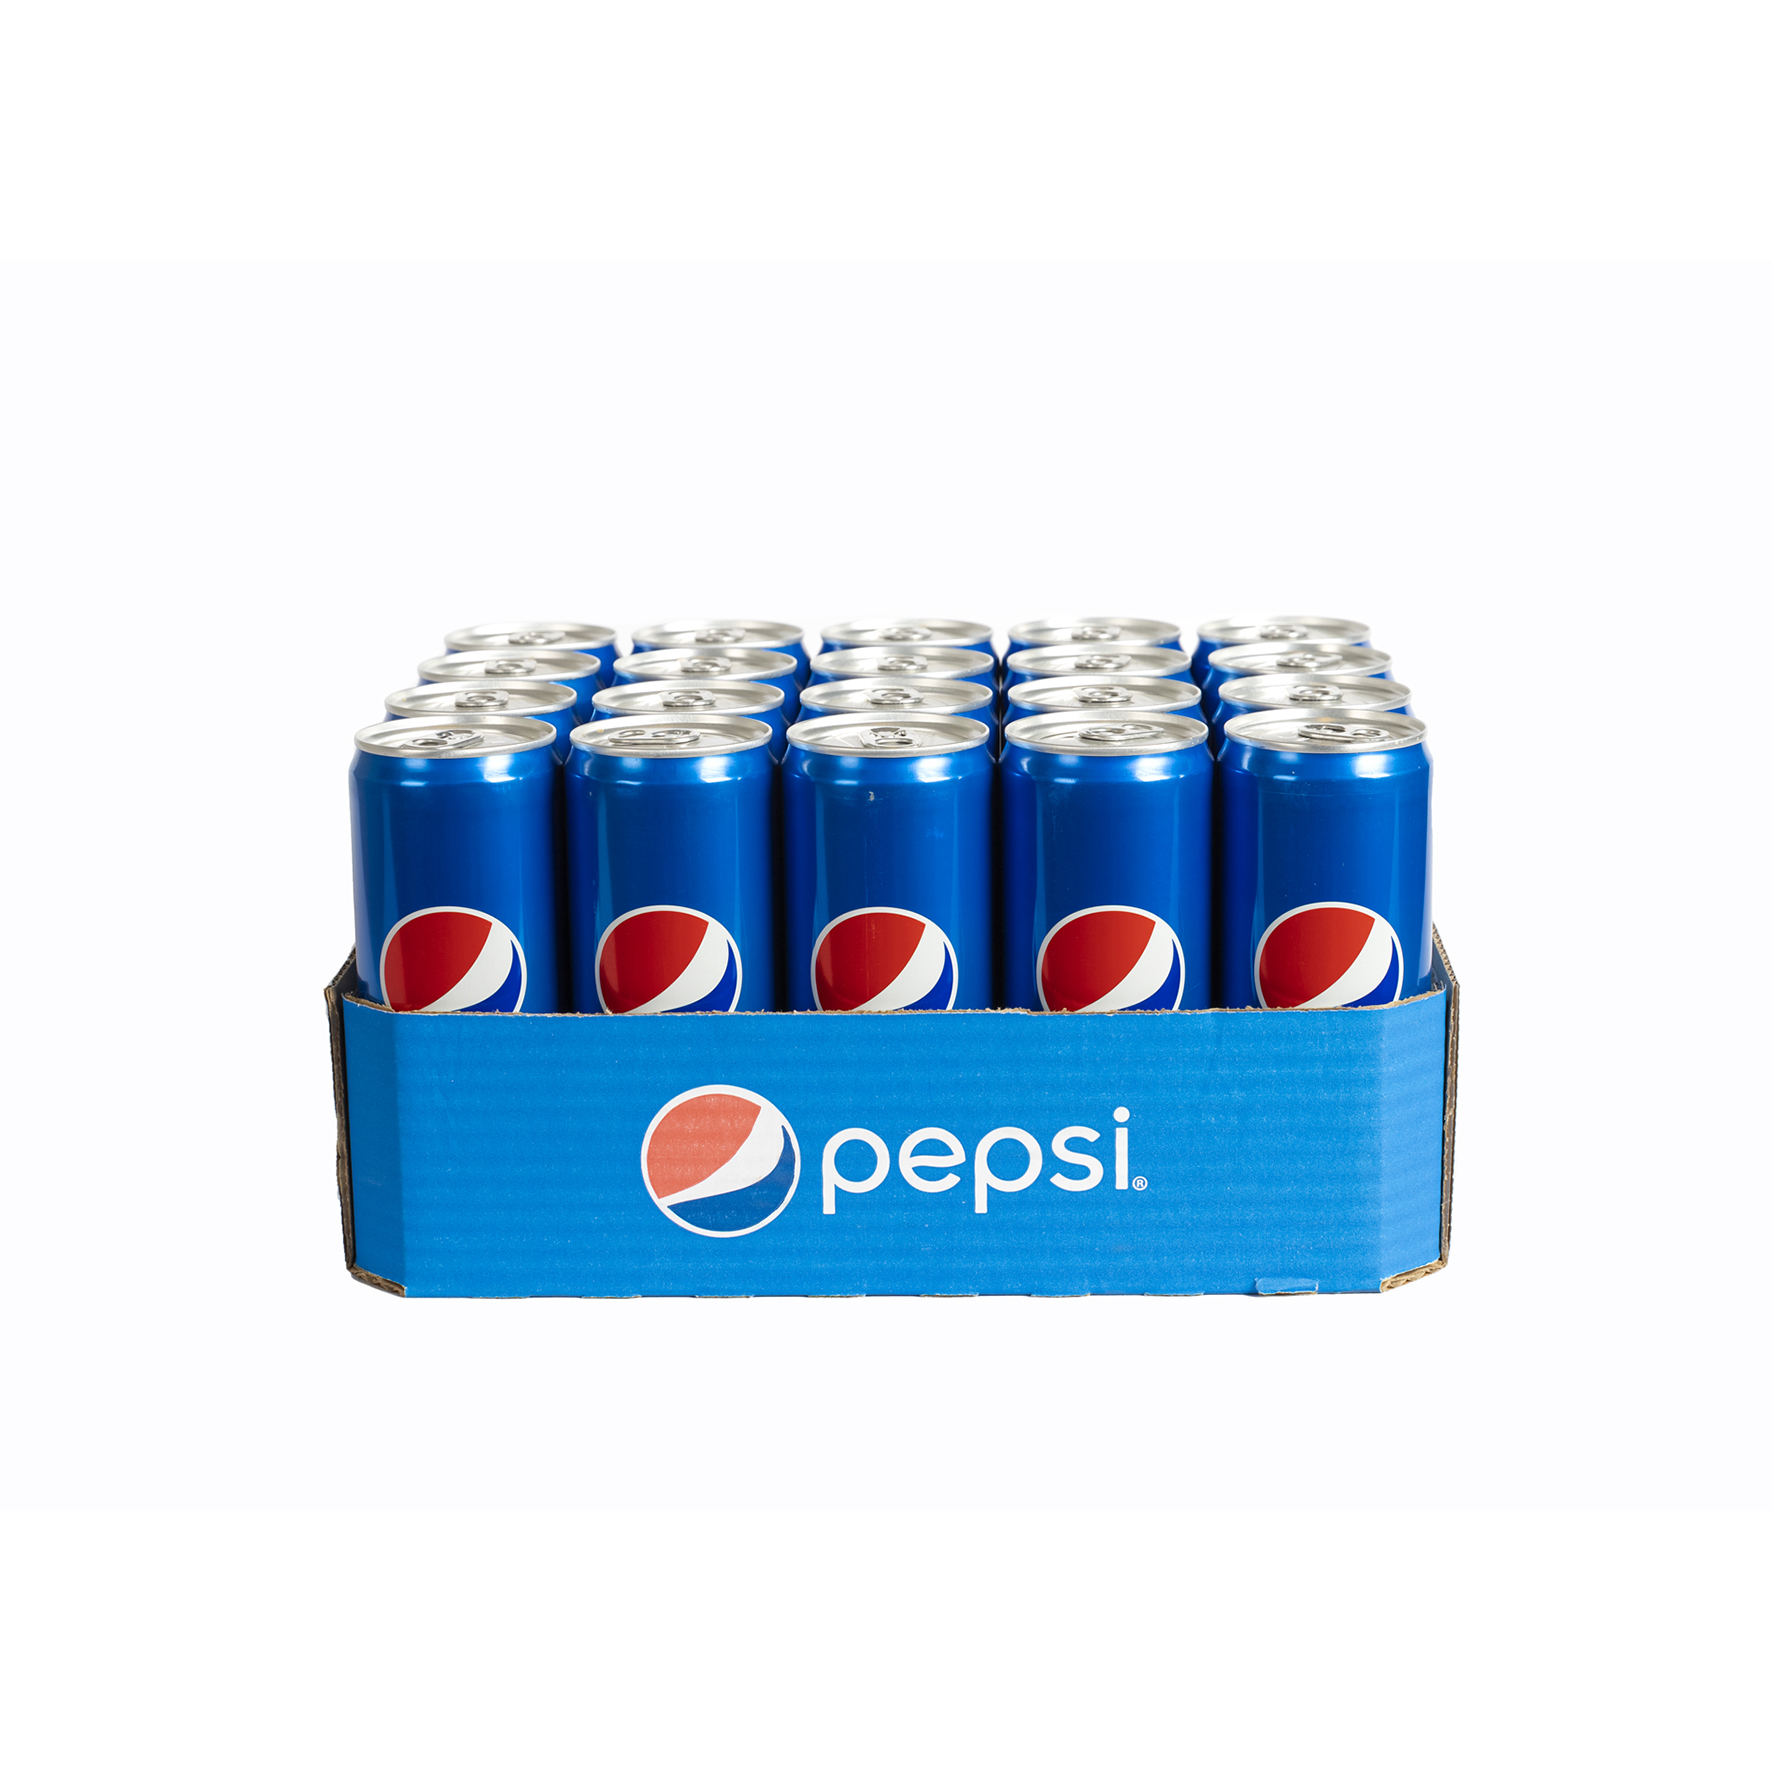 [8560084] Pepsi 33cl sleek can